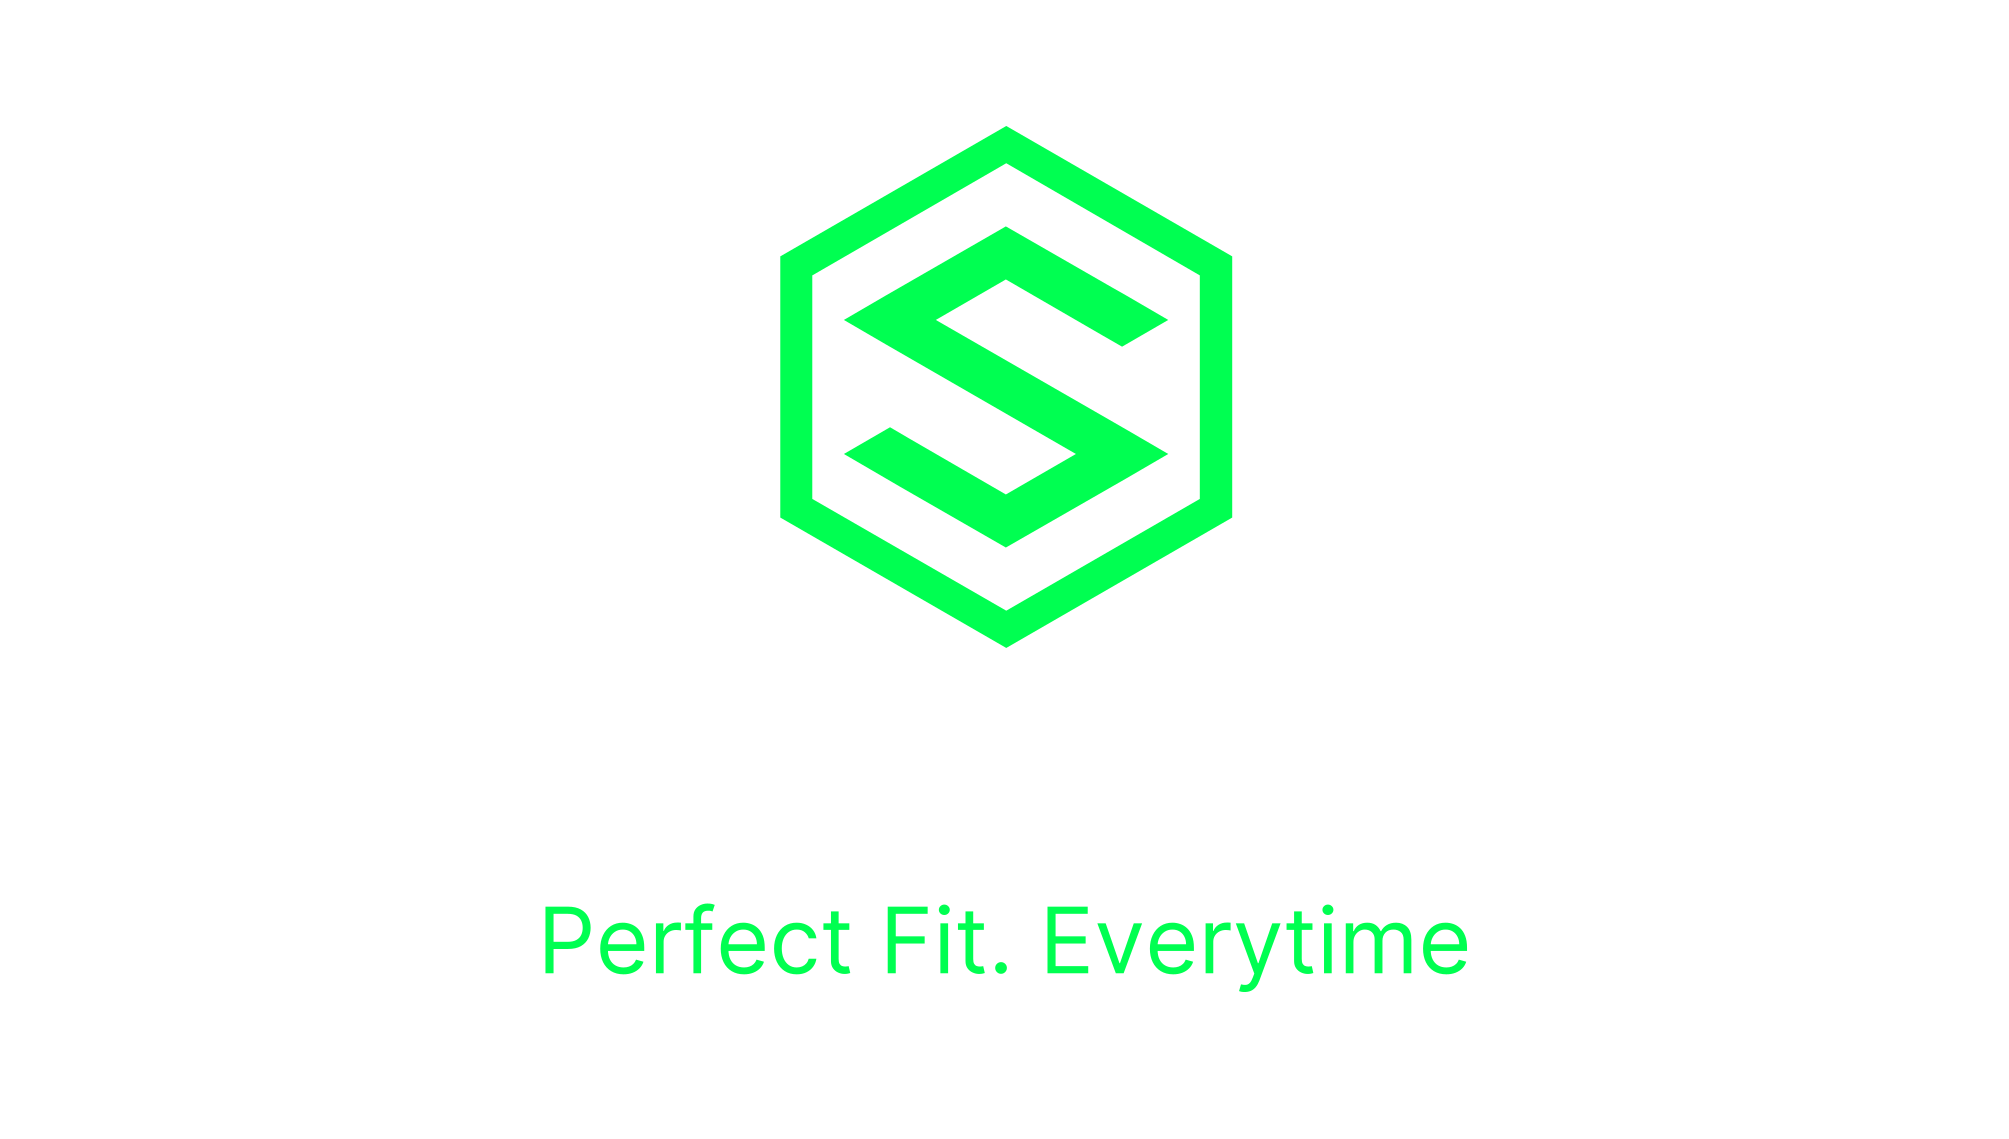 SBI Orthotic Lab